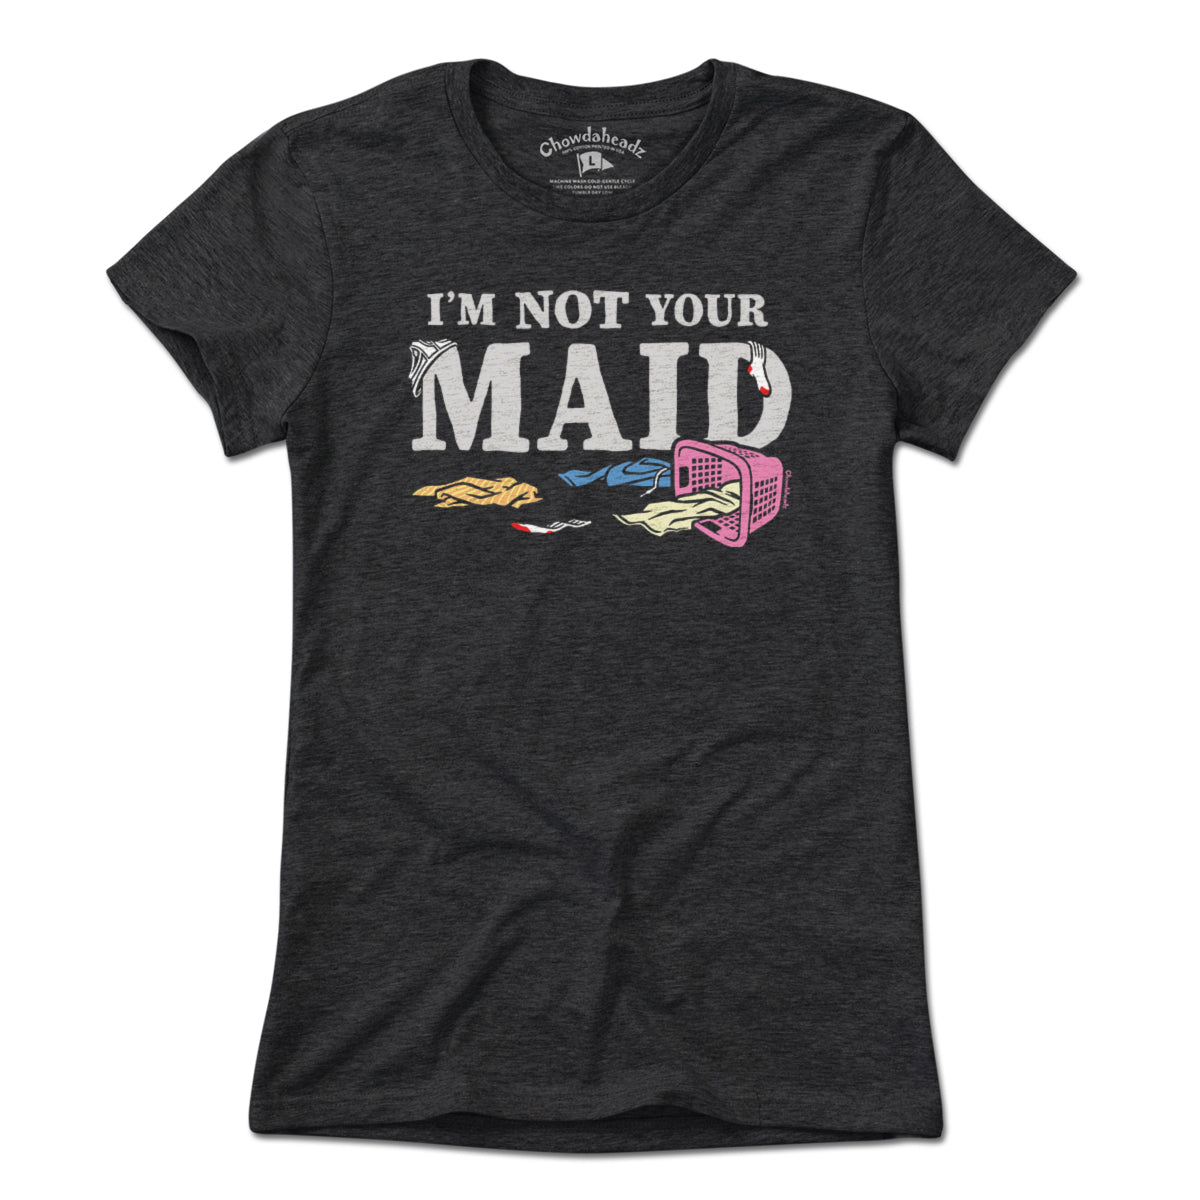 I'm Not Your Maid T-Shirt - Chowdaheadz